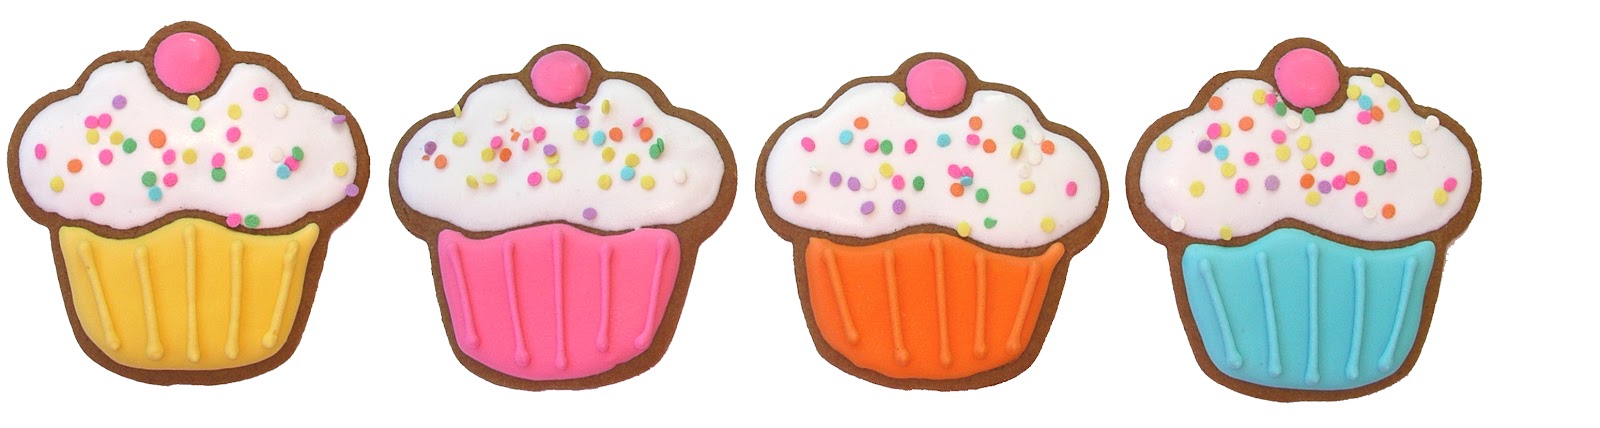 cupcakes clipart row